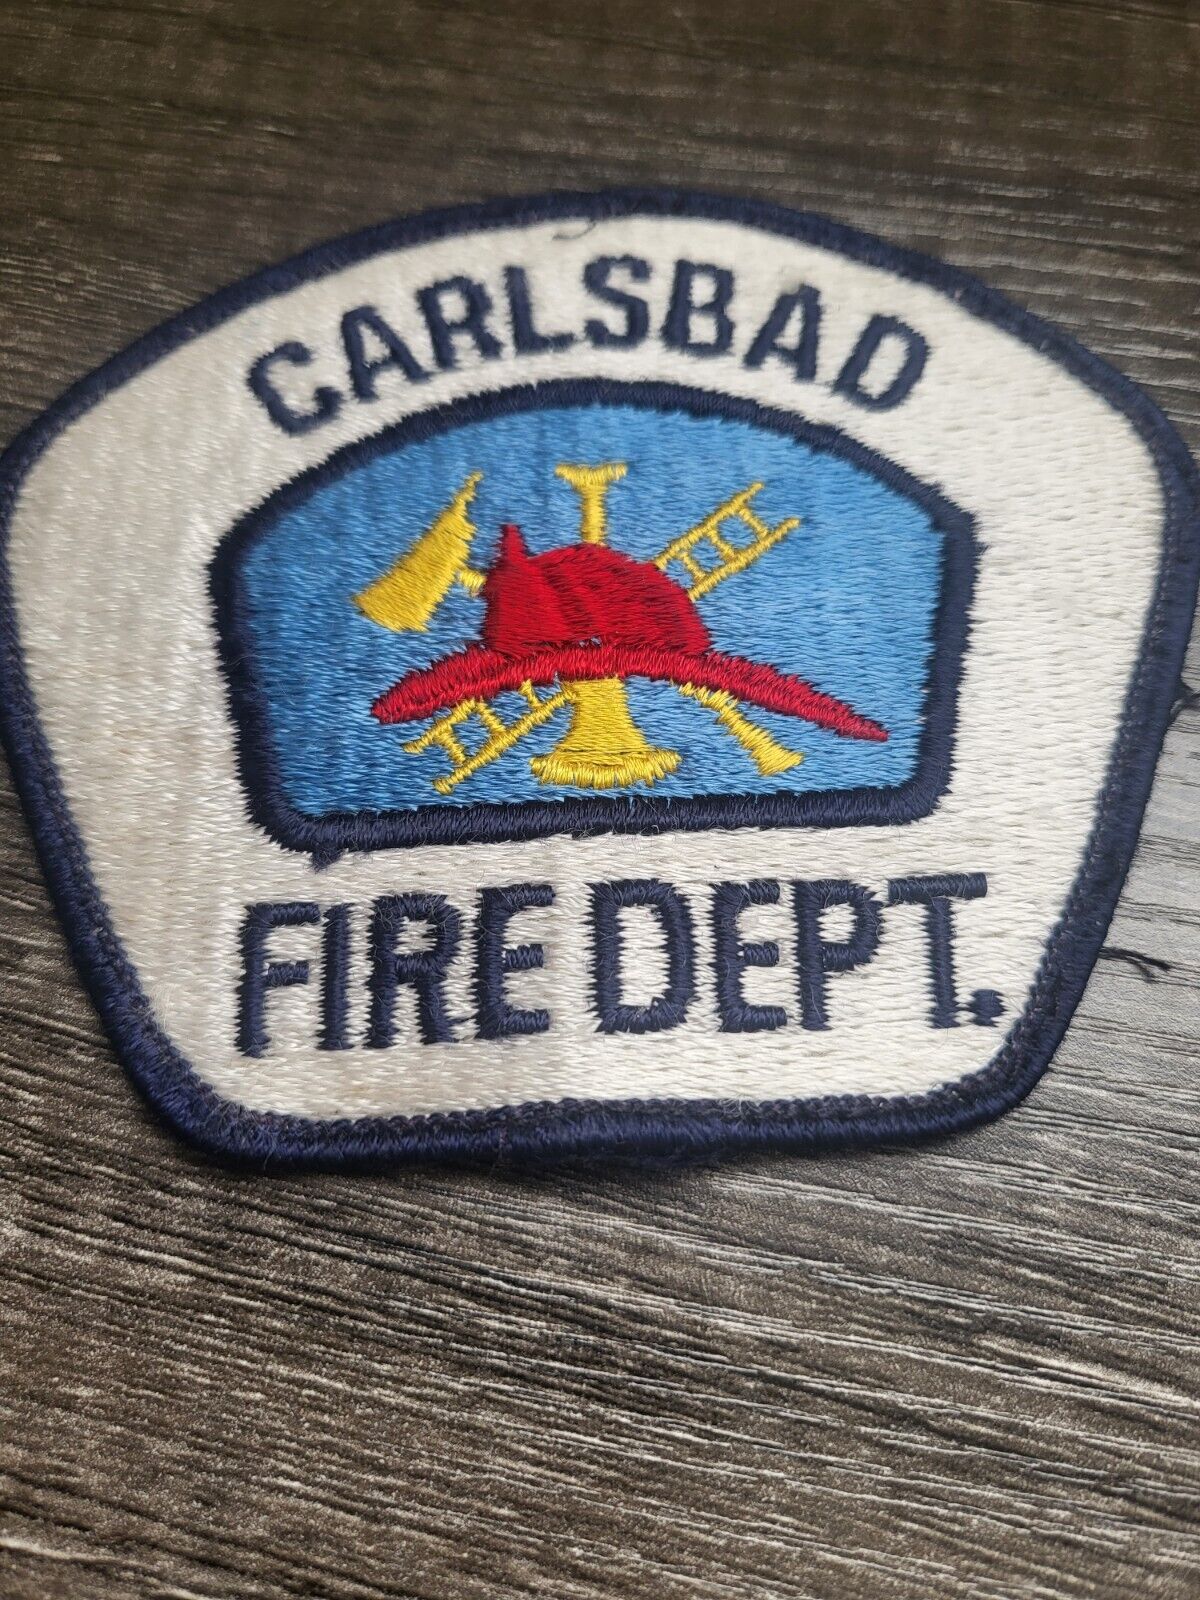 Rare Carlsbad, CA Fire Patch Vintage BM